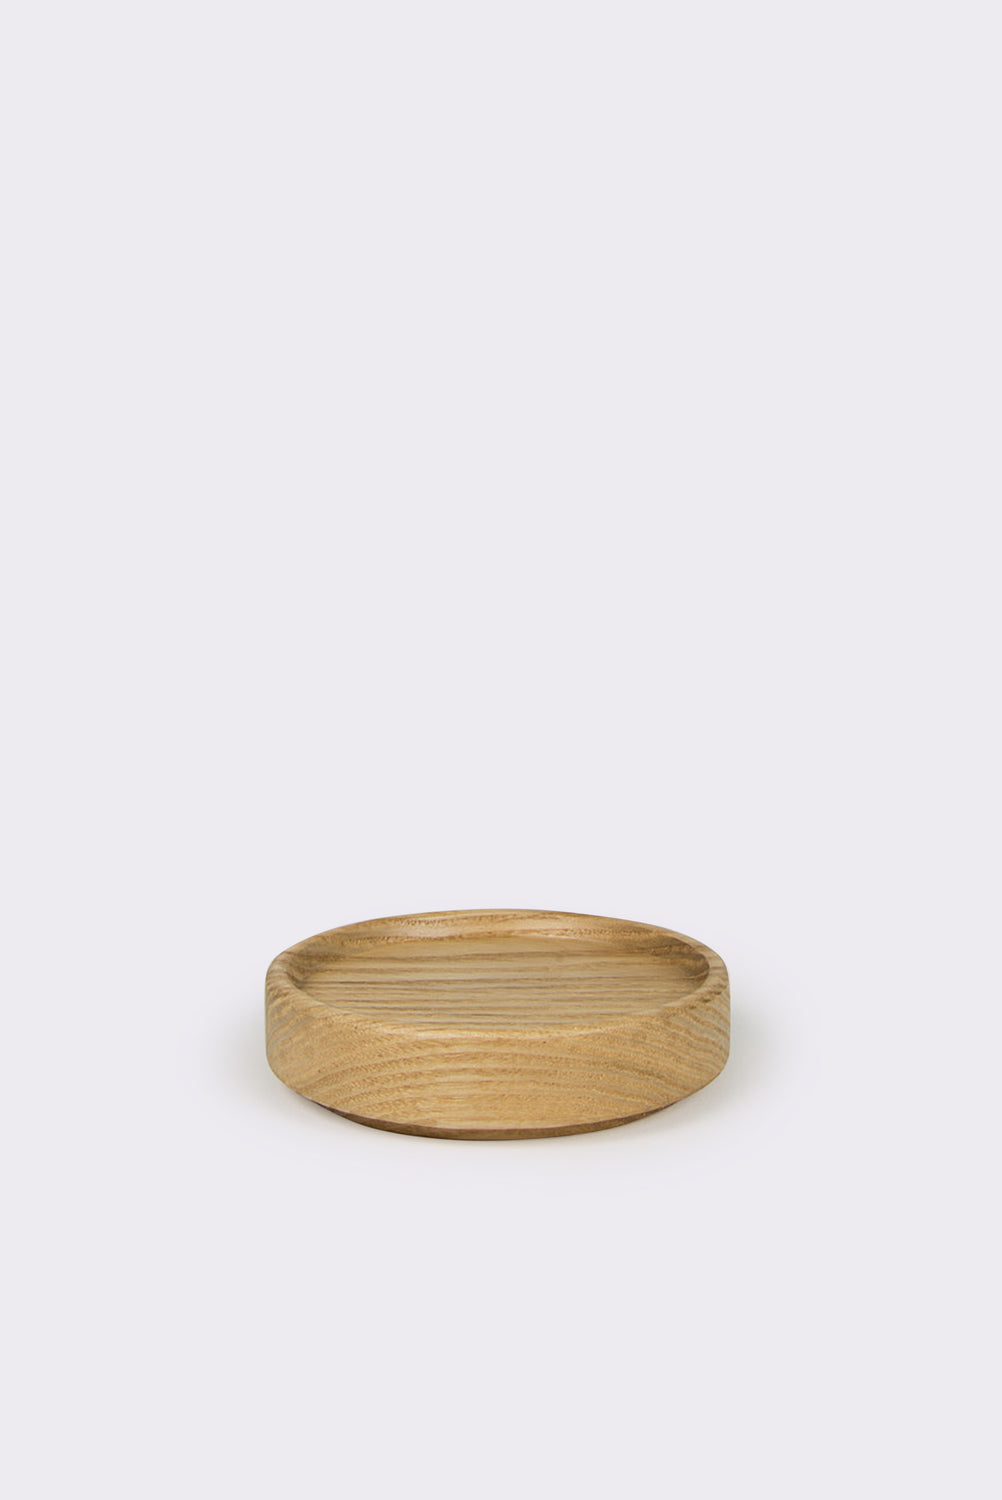 Small Ash Wood Tray, 3 3/8" Diameter